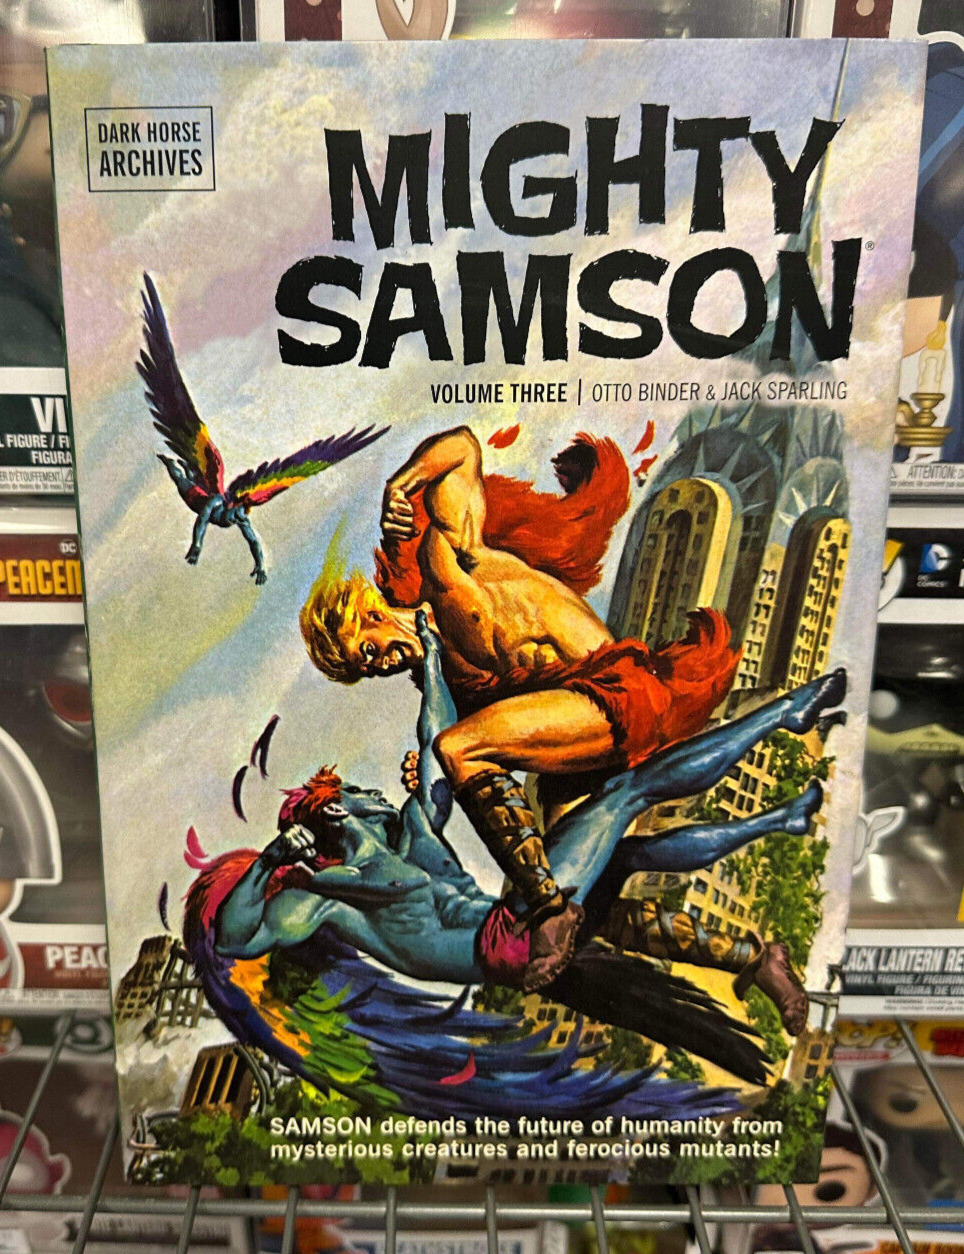 Mighty Samson Volume 3 Hardcover Dark Horse Archives